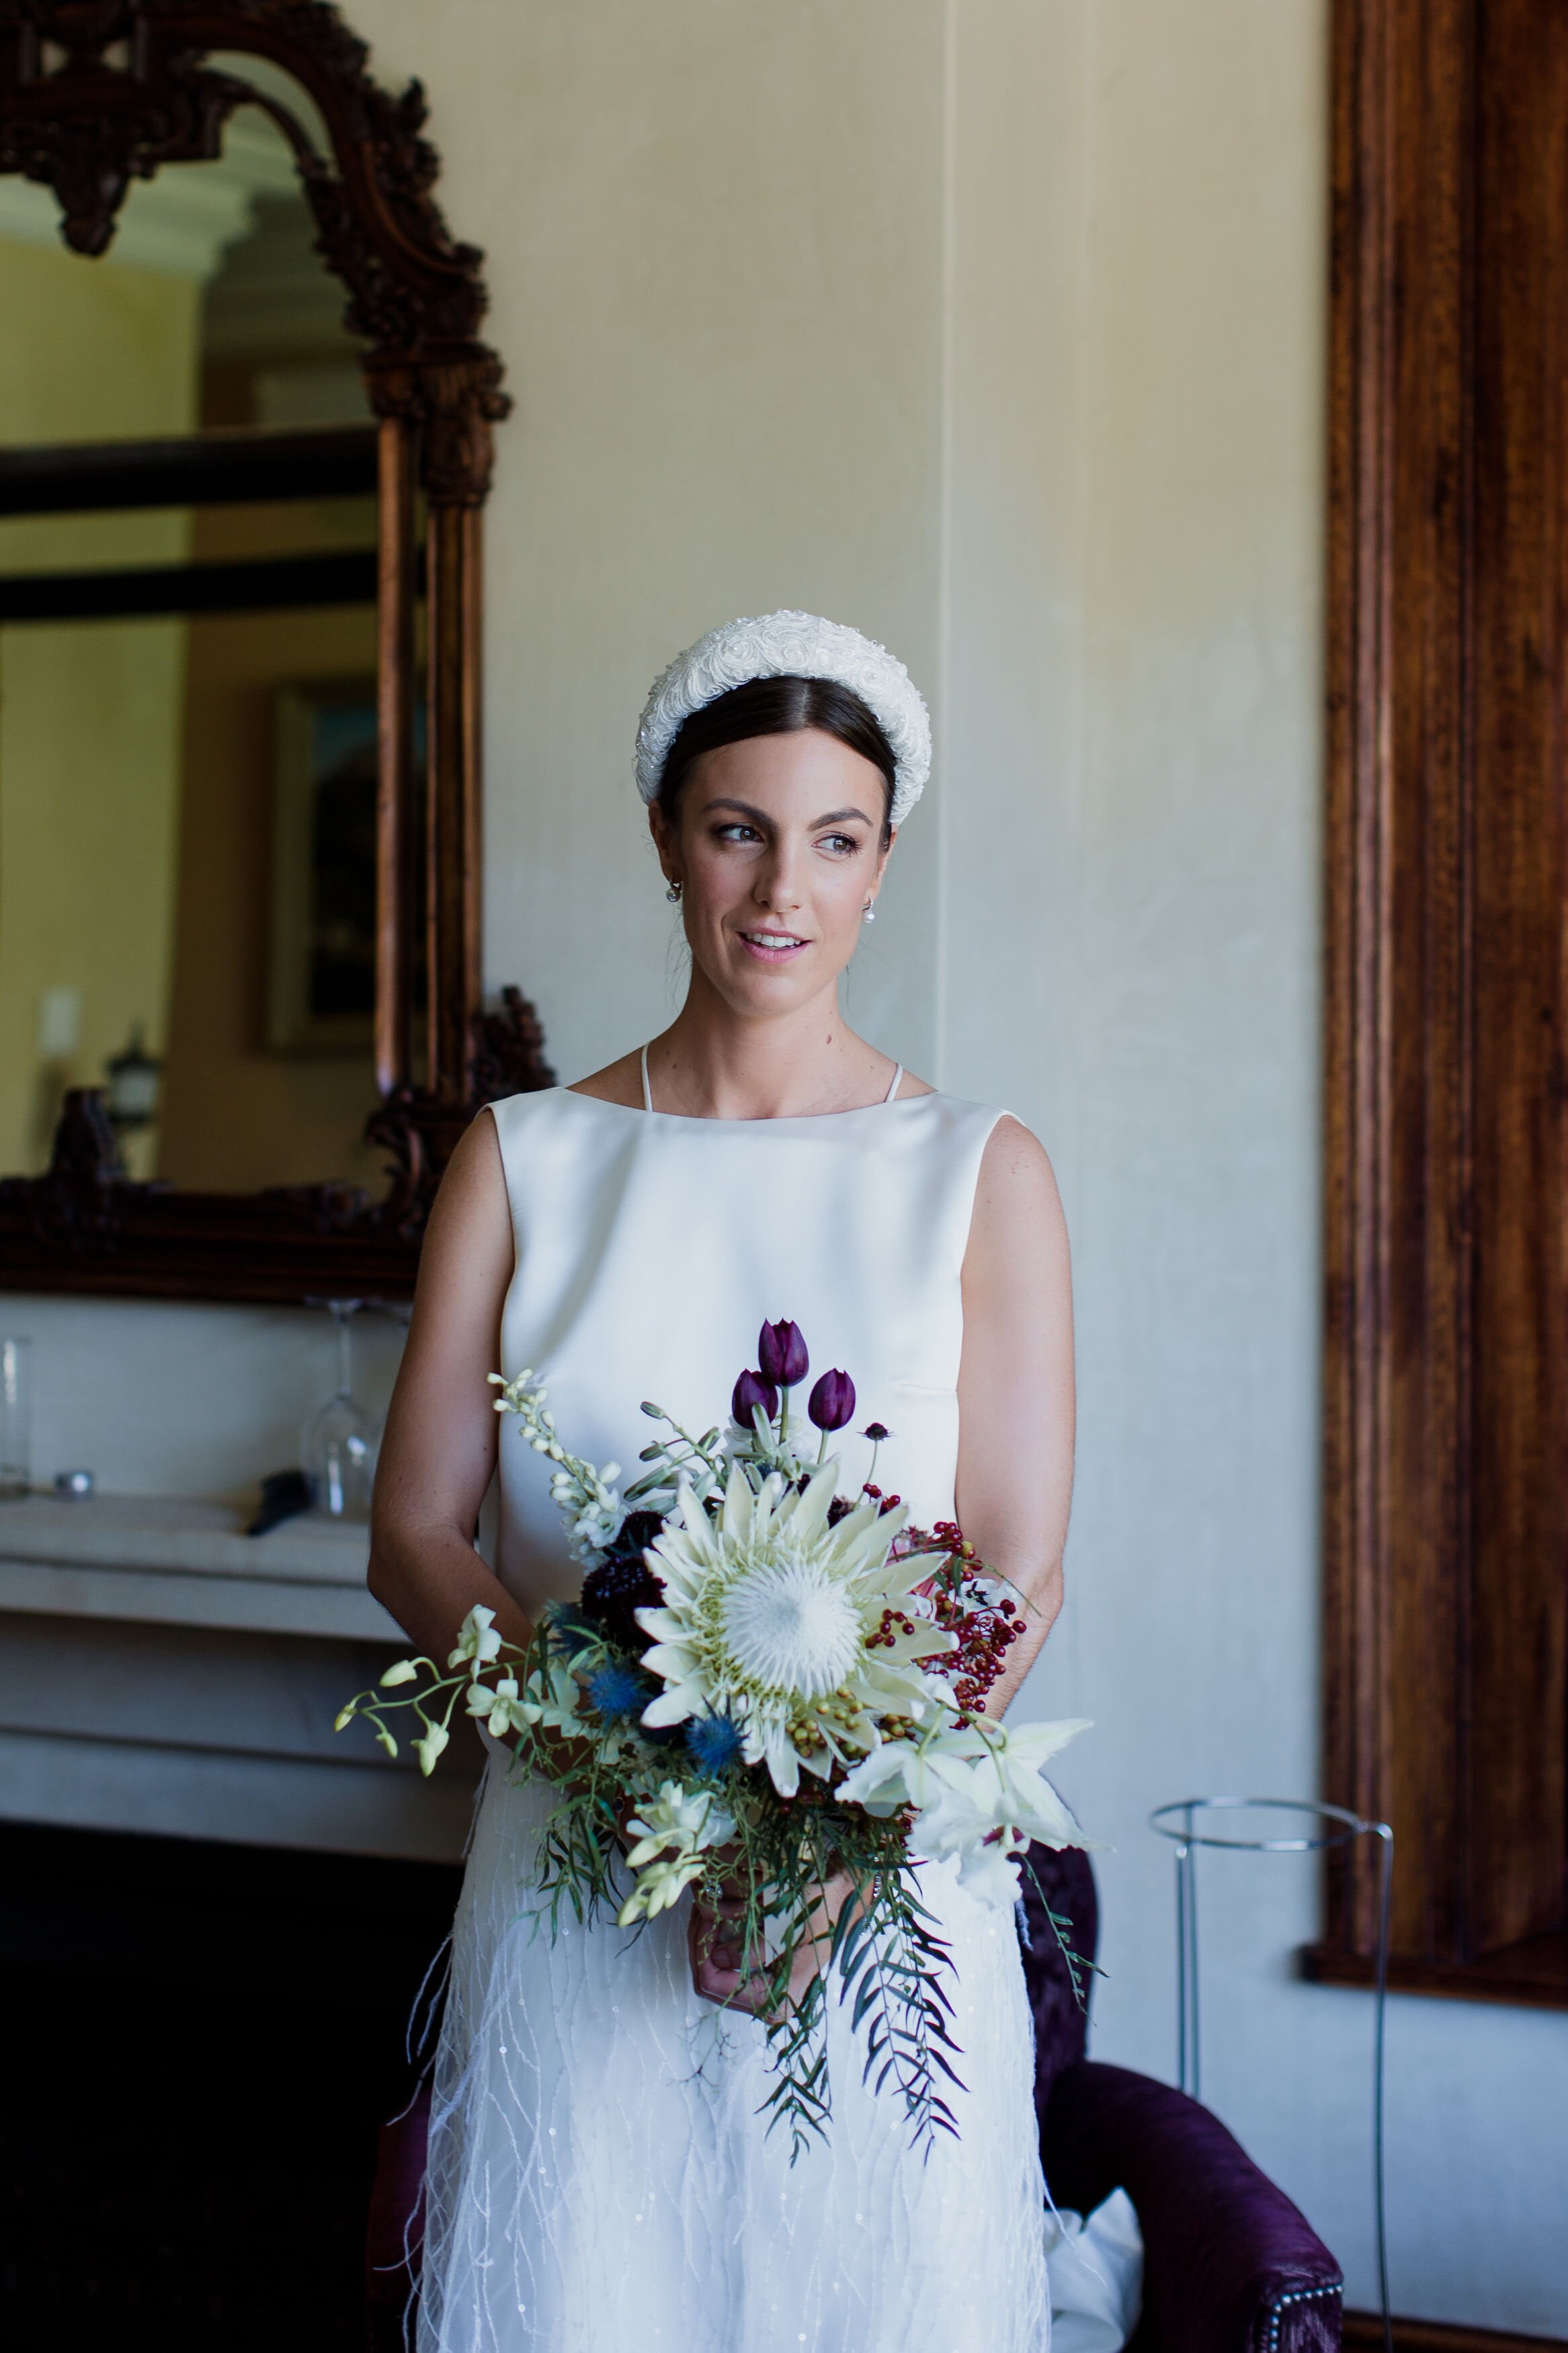 Beautiful bride Megan wore a wedding dress by Halfpenny London